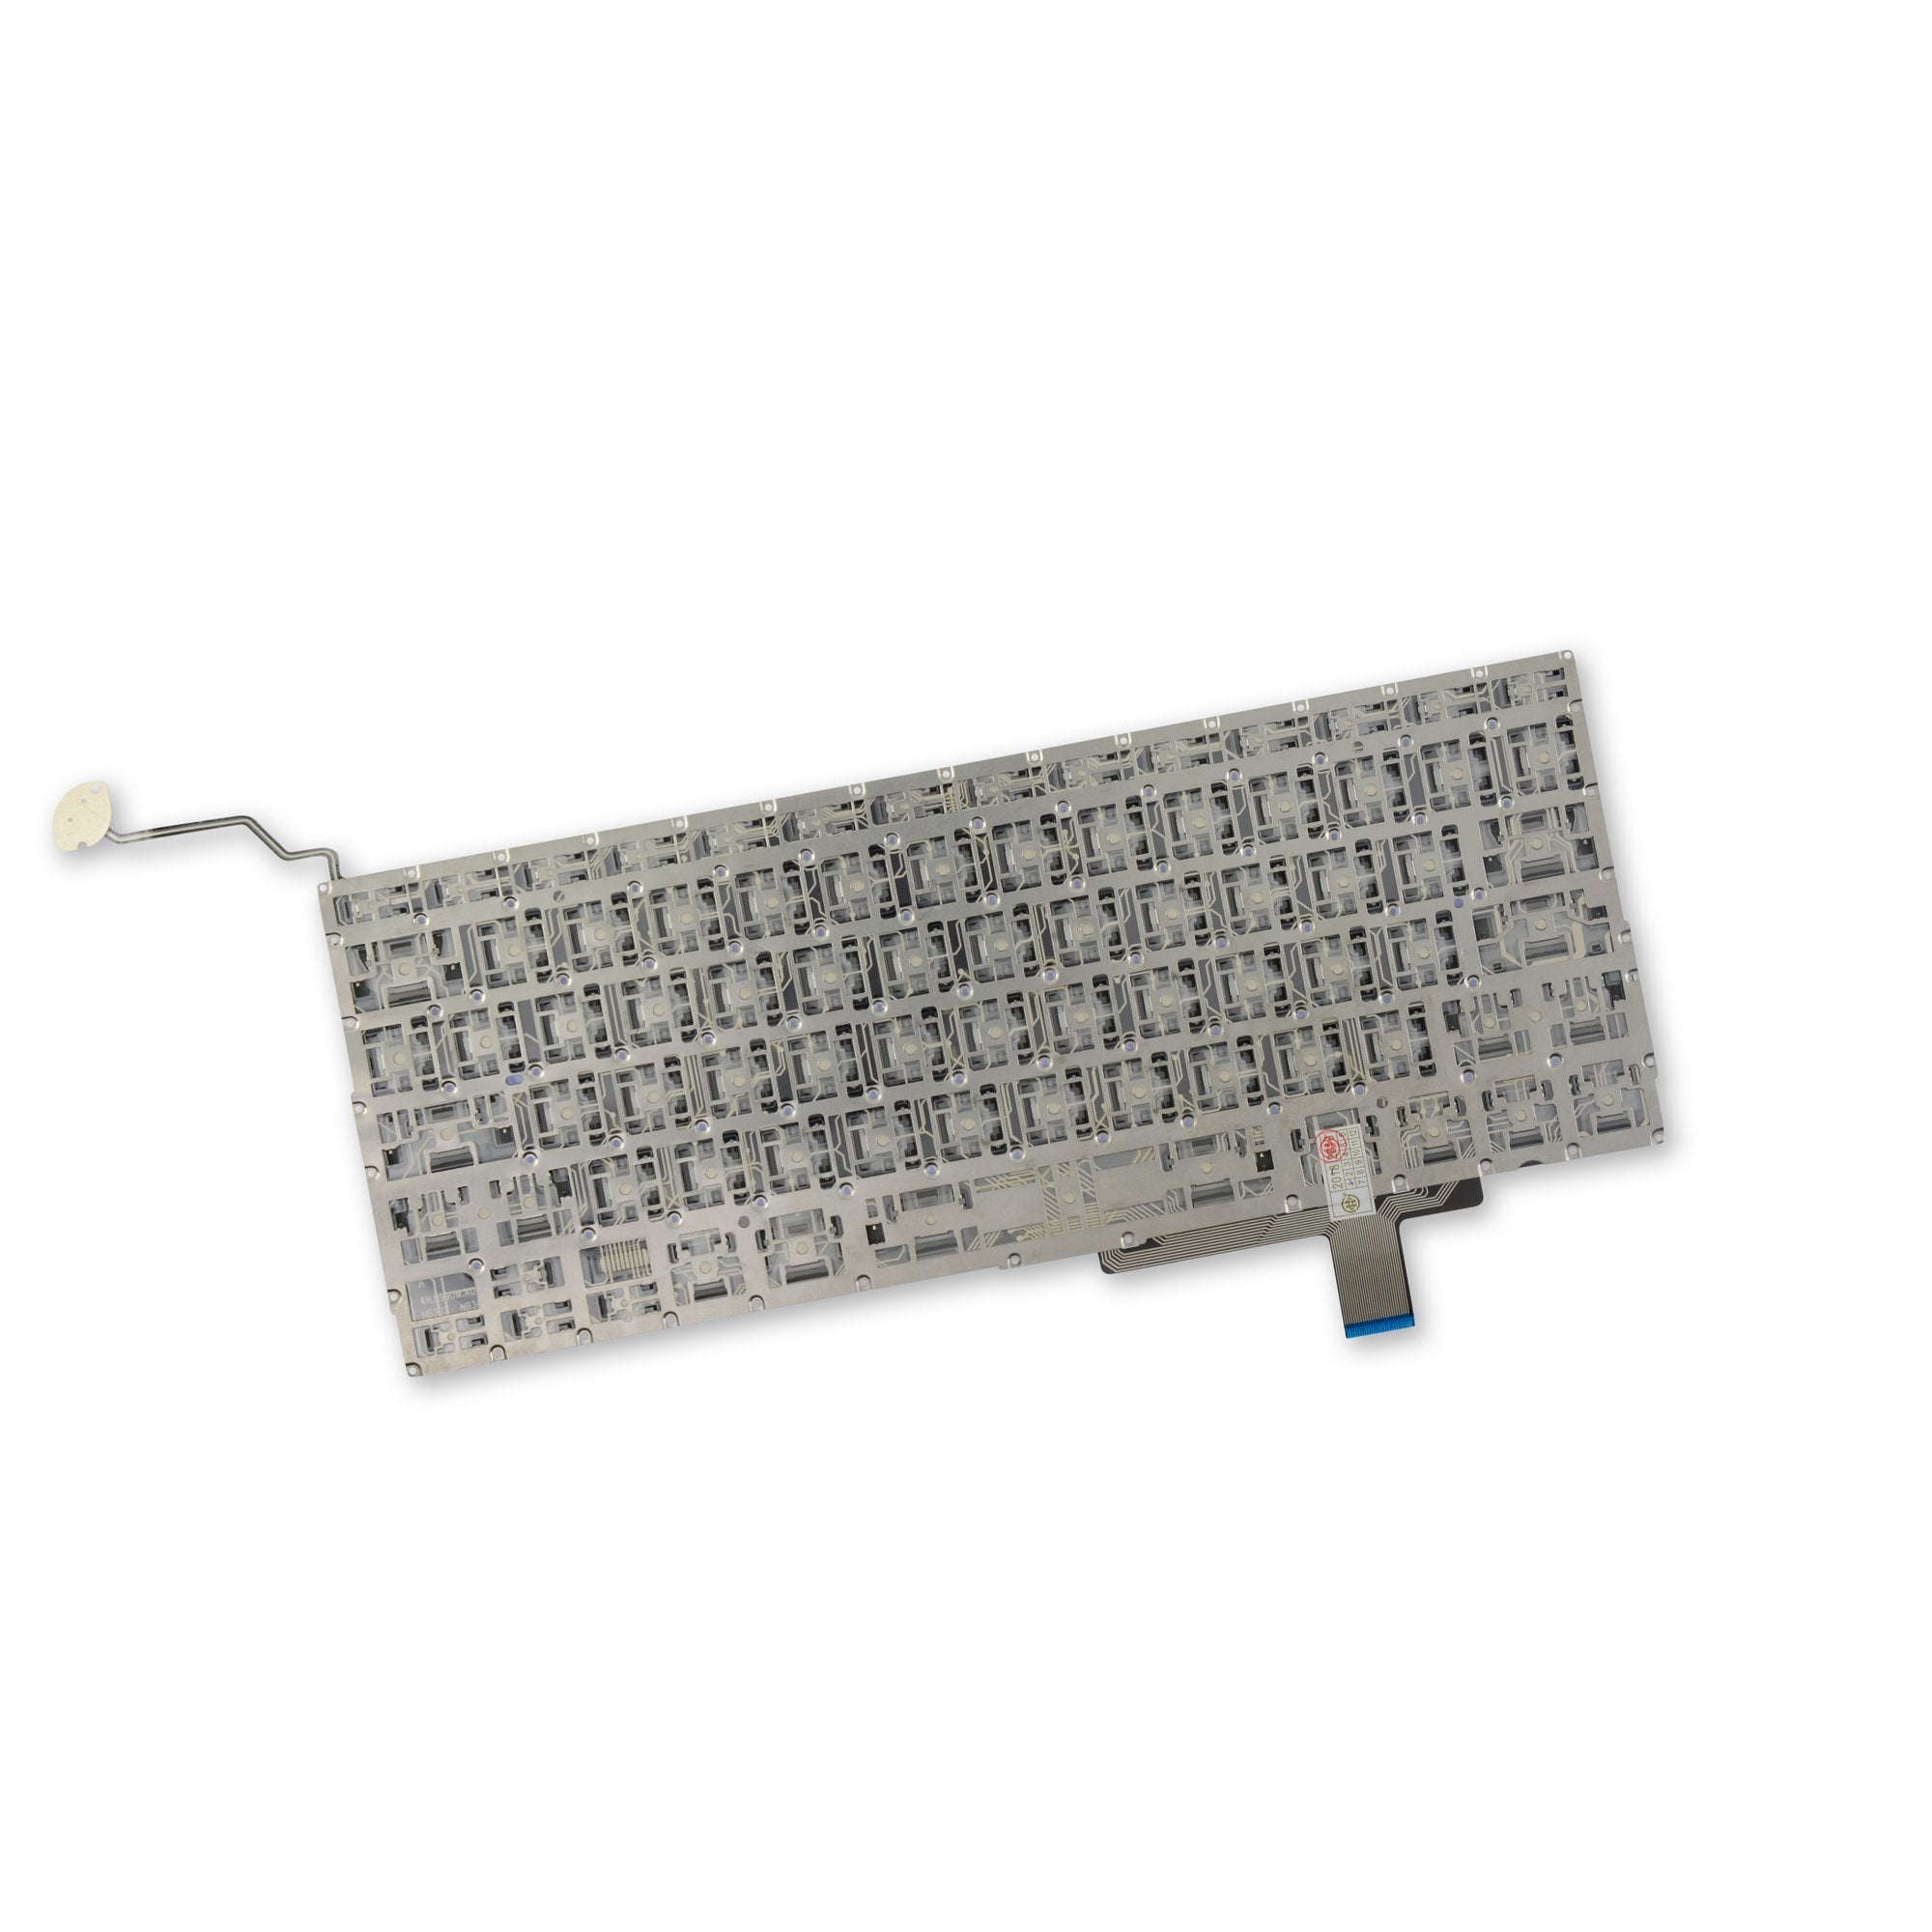 MacBook Pro 17" Unibody (Early 2009-Late 2011) Keyboard